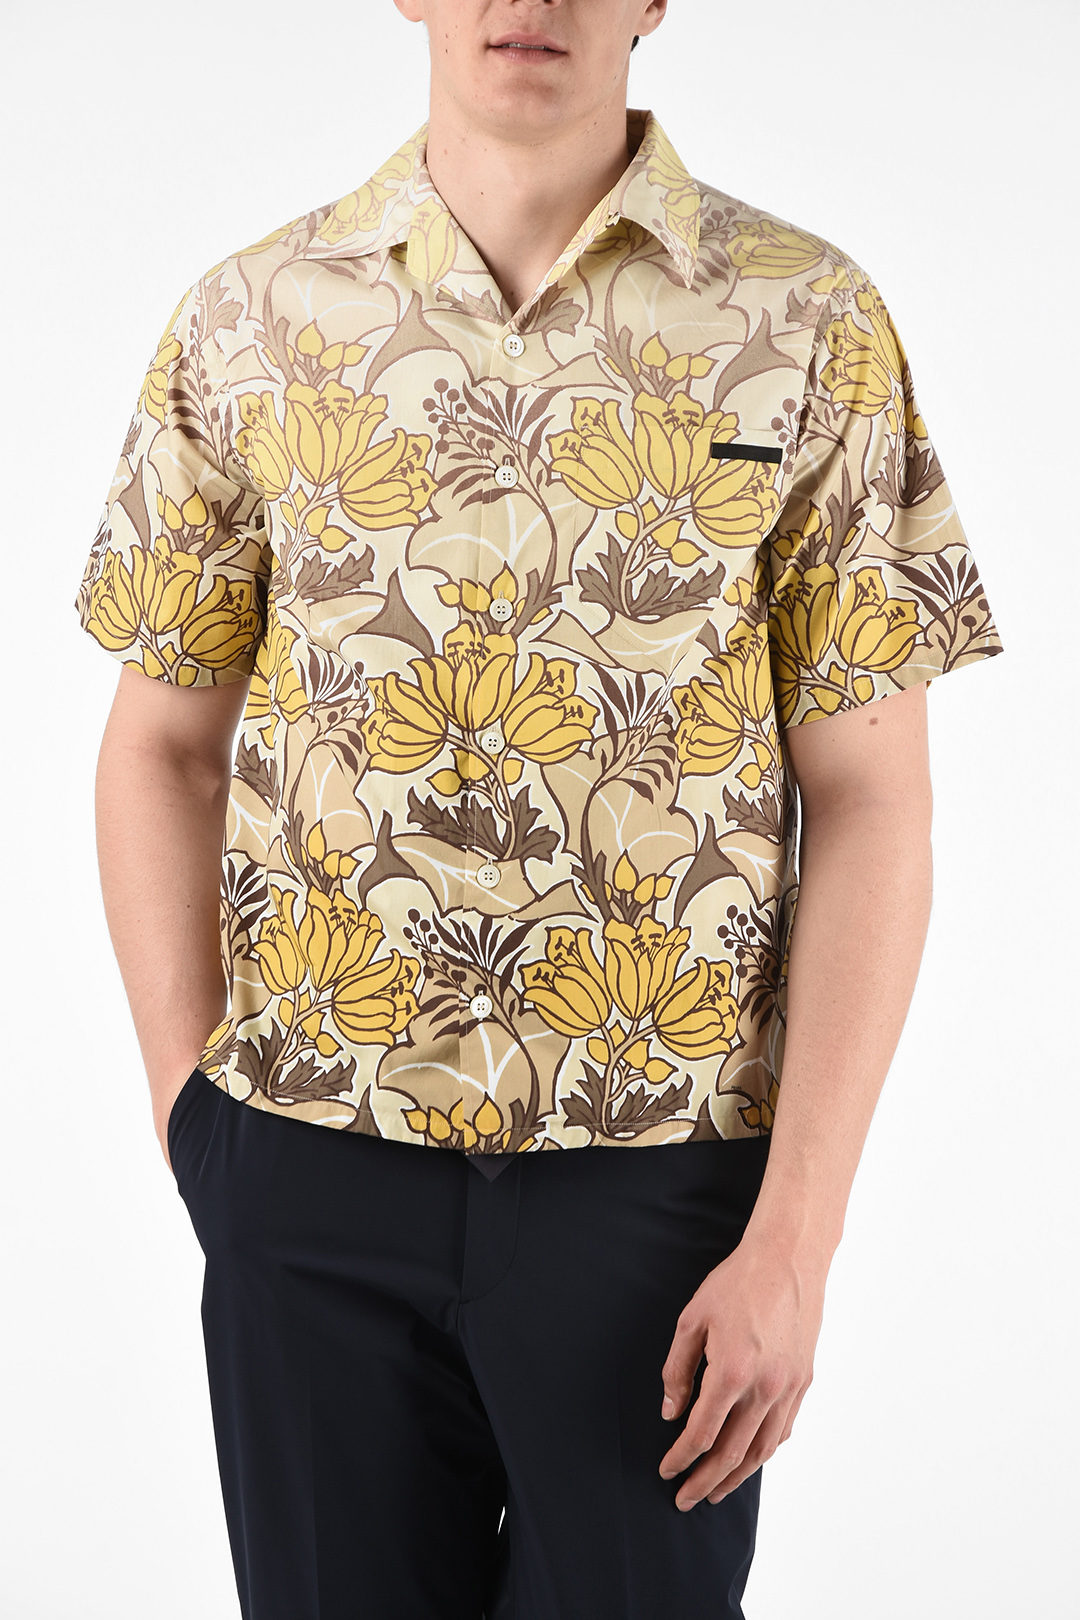 Prada Floral Cotton Short Sleeve Shirt men - Glamood Outlet